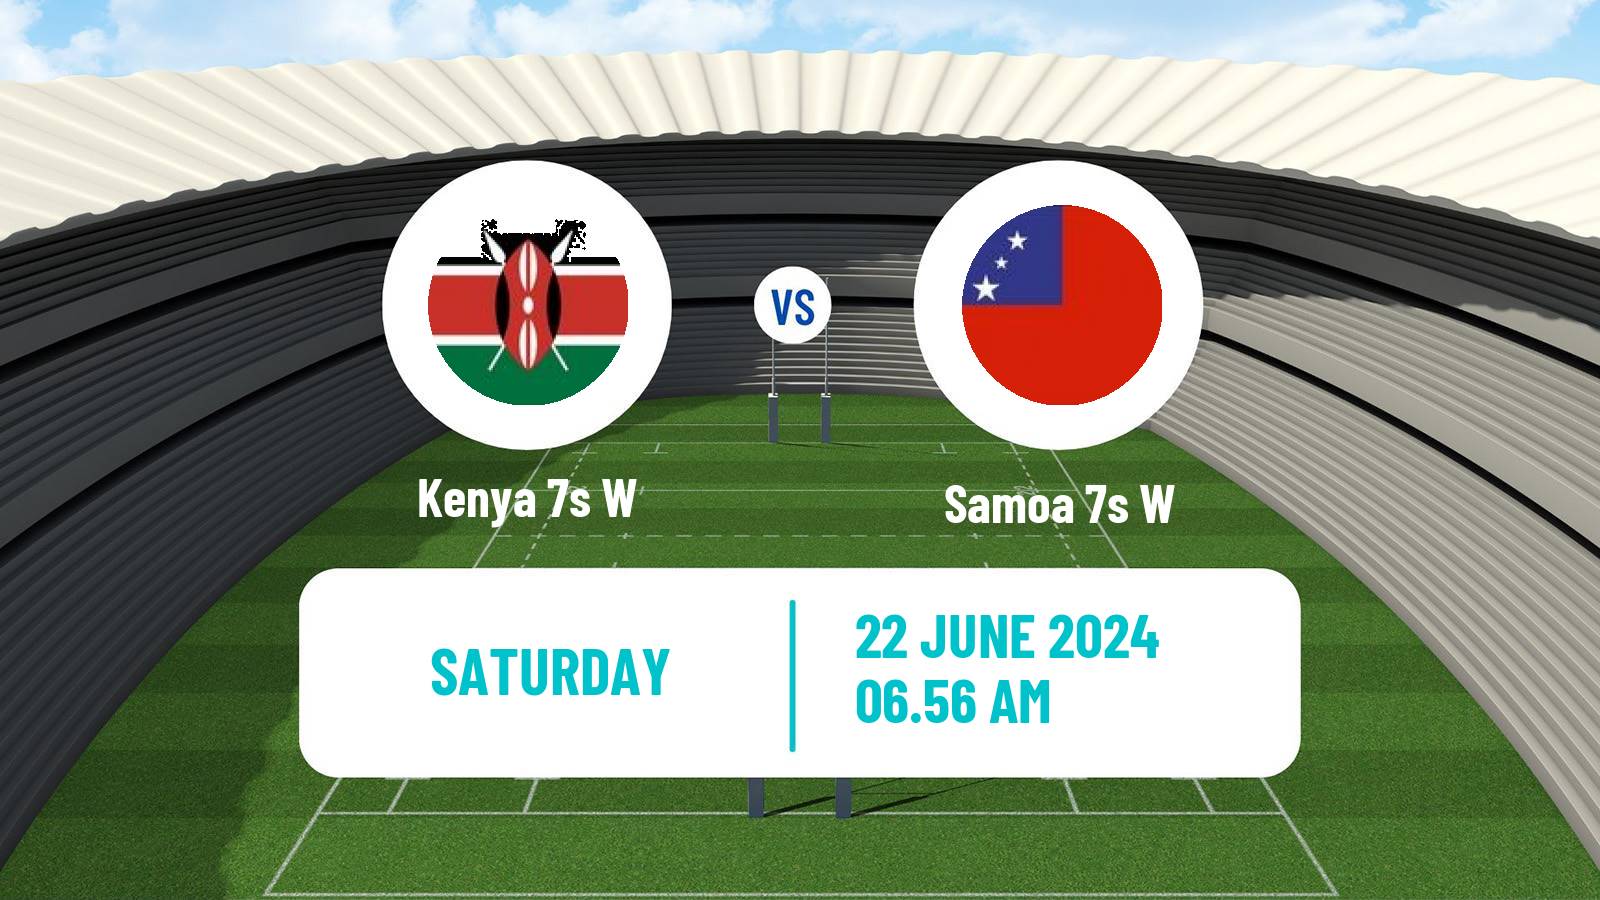 Rugby union Olympic Games 7s Rugby Women Kenya 7s W - Samoa 7s W